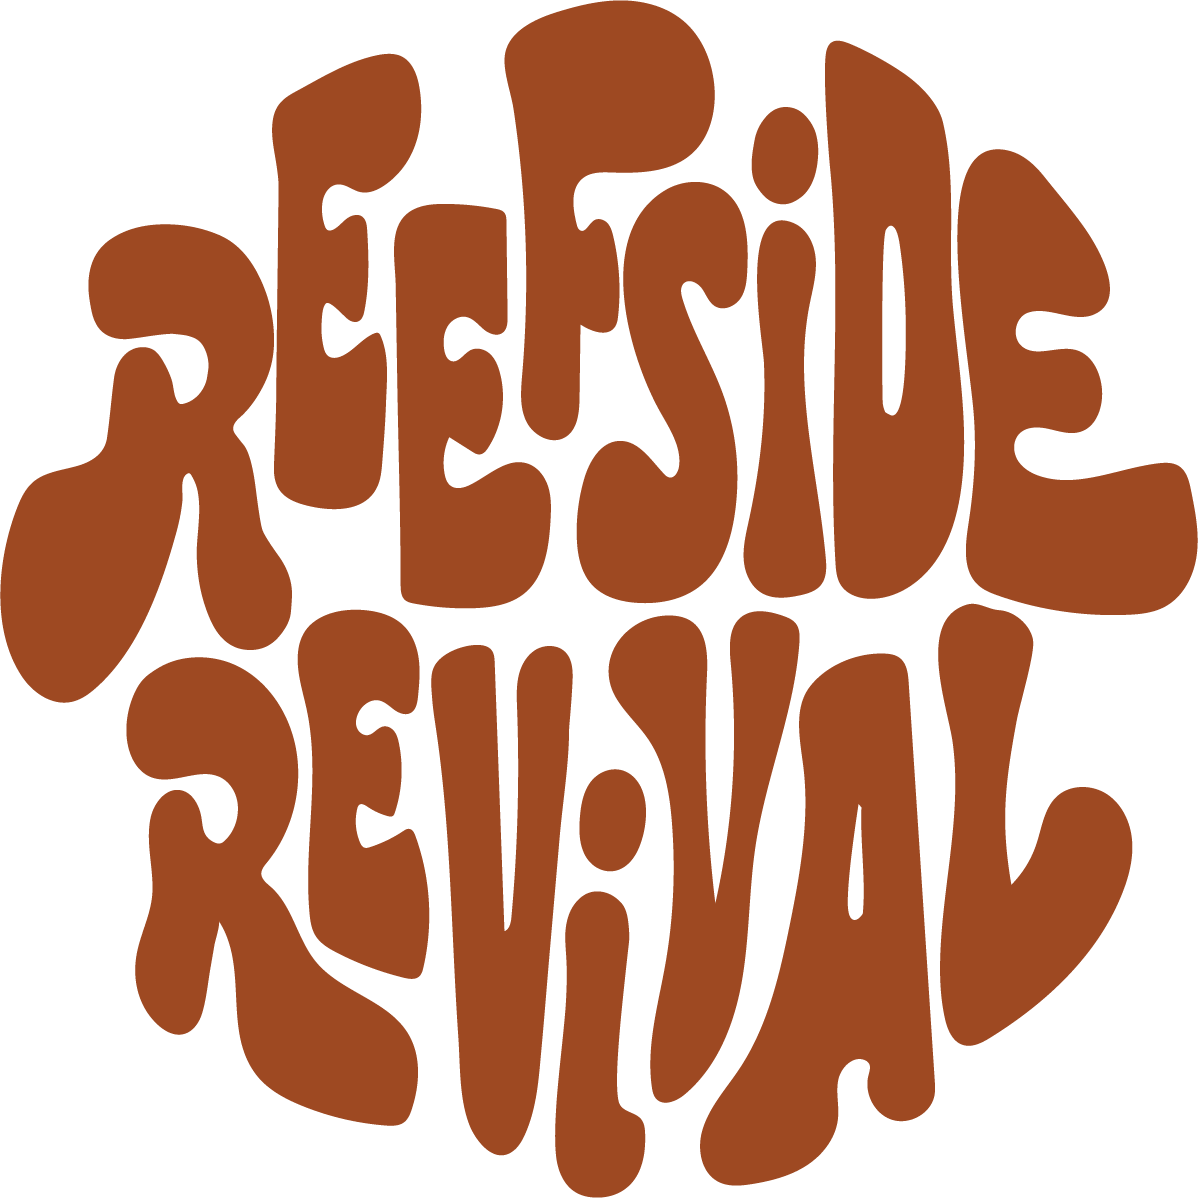 Reefside Revival